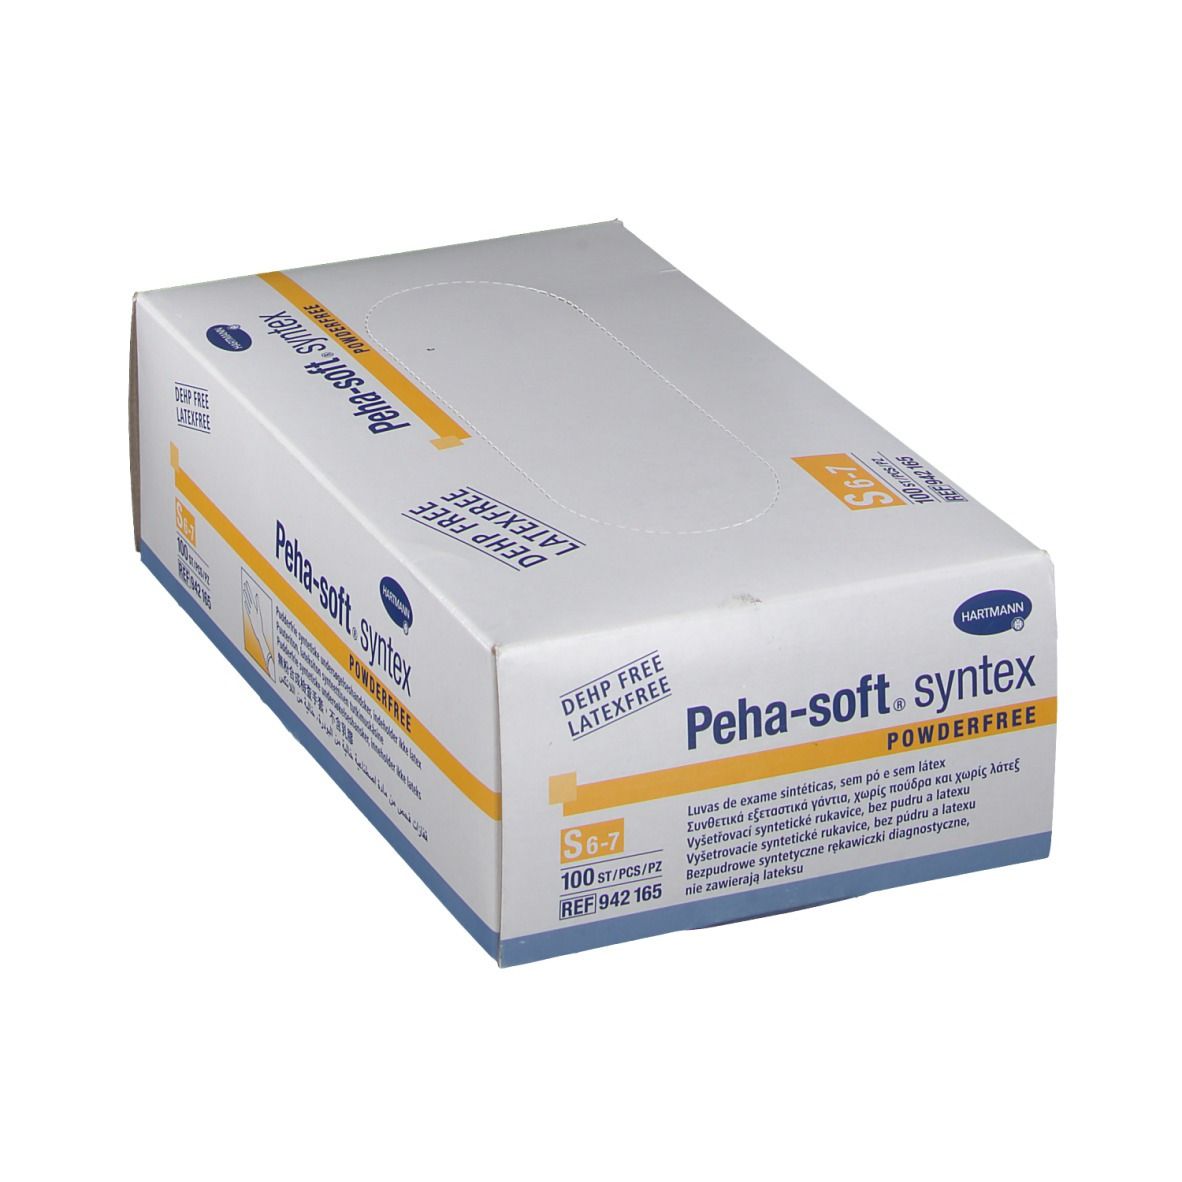 Peha-soft® syntex puderfrei unsteril Untersuchungshandschuhe Gr. S 6 - 7